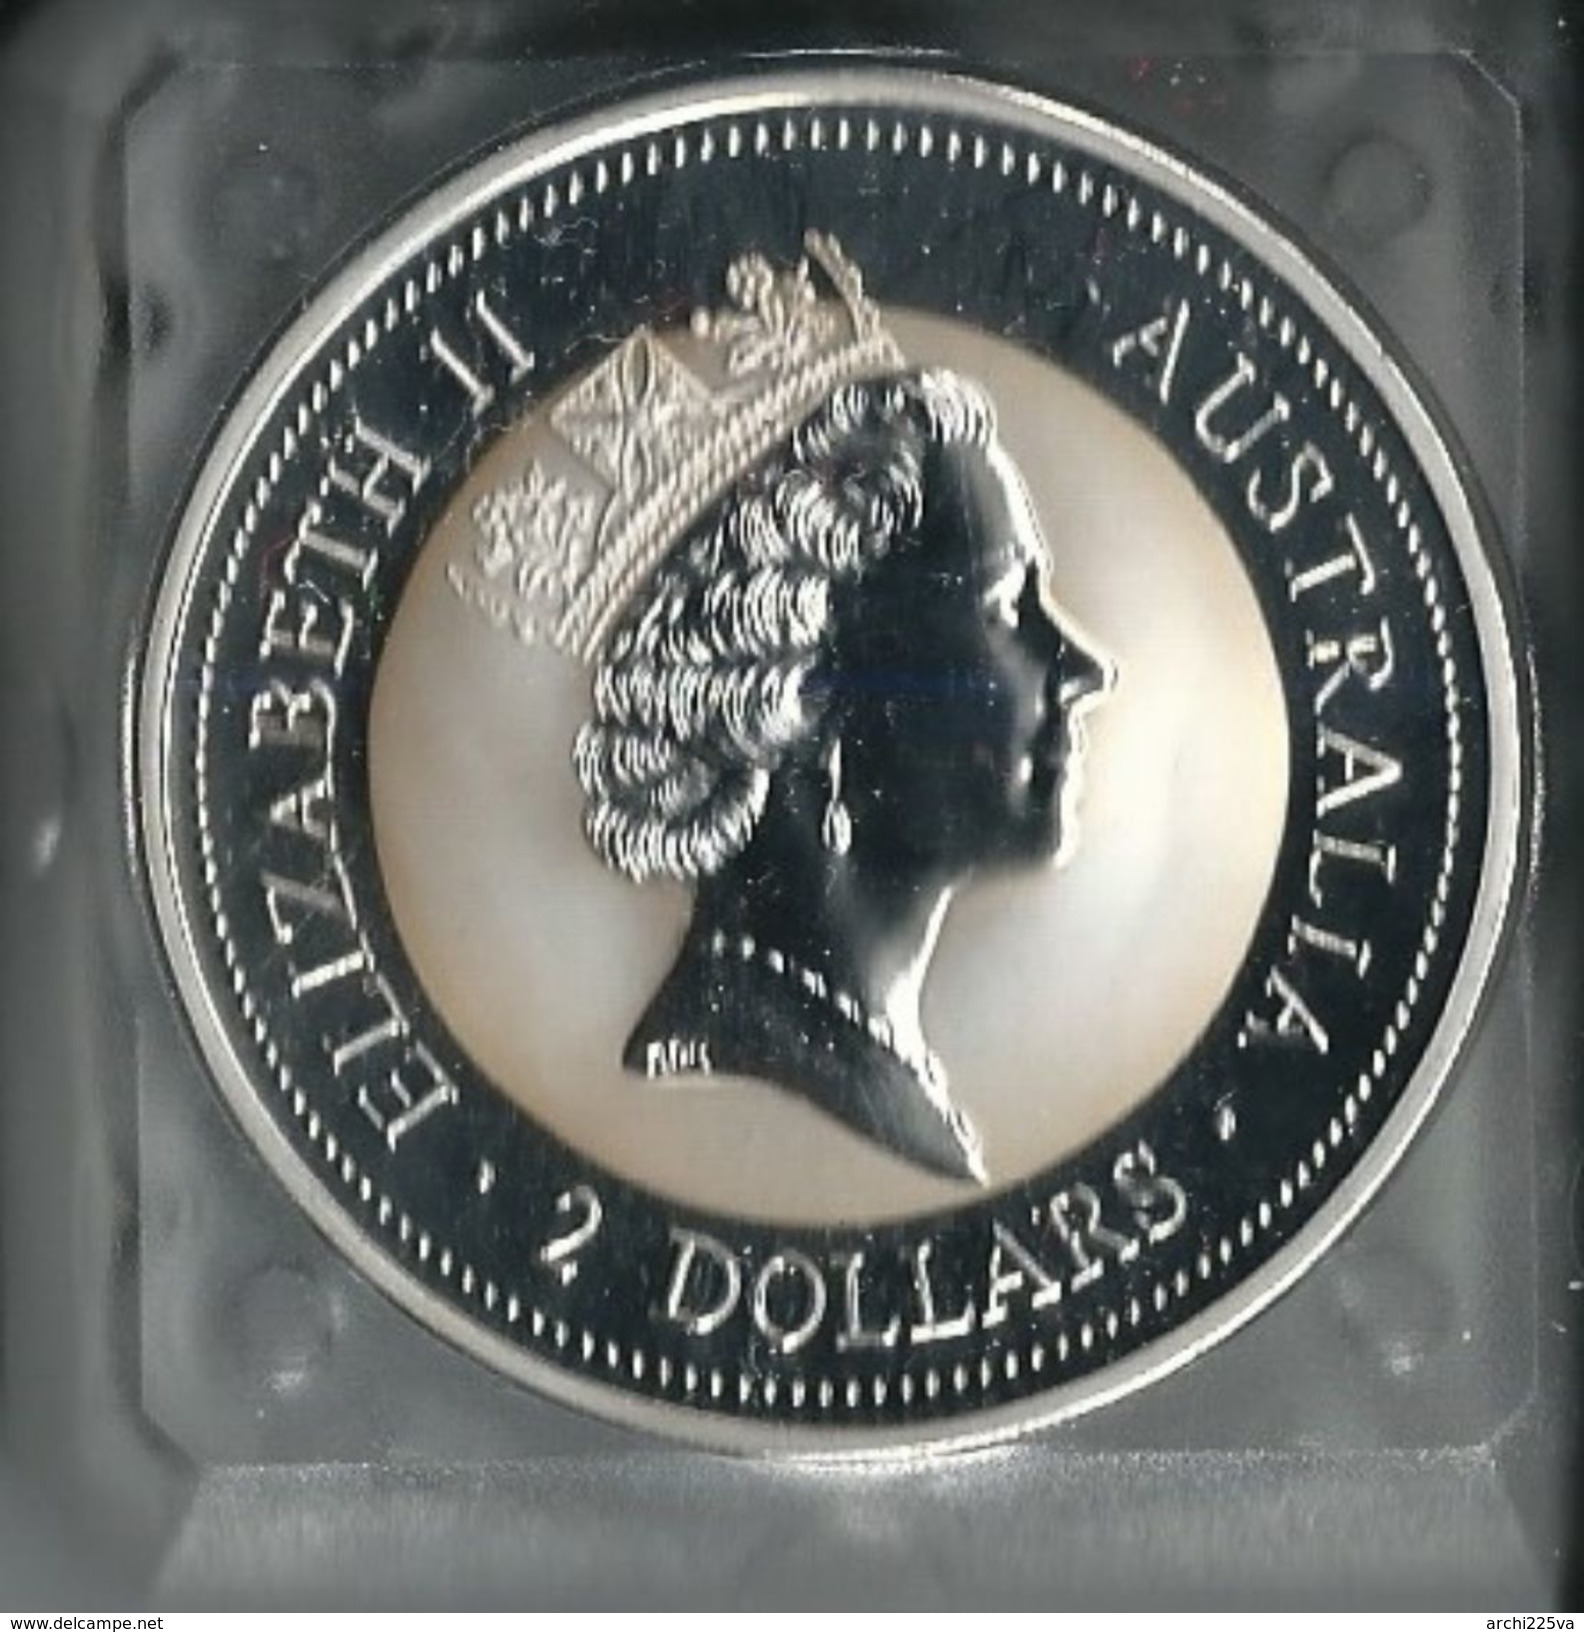 1994 AUSTRALIA - Kookaburra - 2 Dollars FDC PROOF - Argento / Argent / Silver  999 / 1000 - Confezione Originale - 2 Dollars